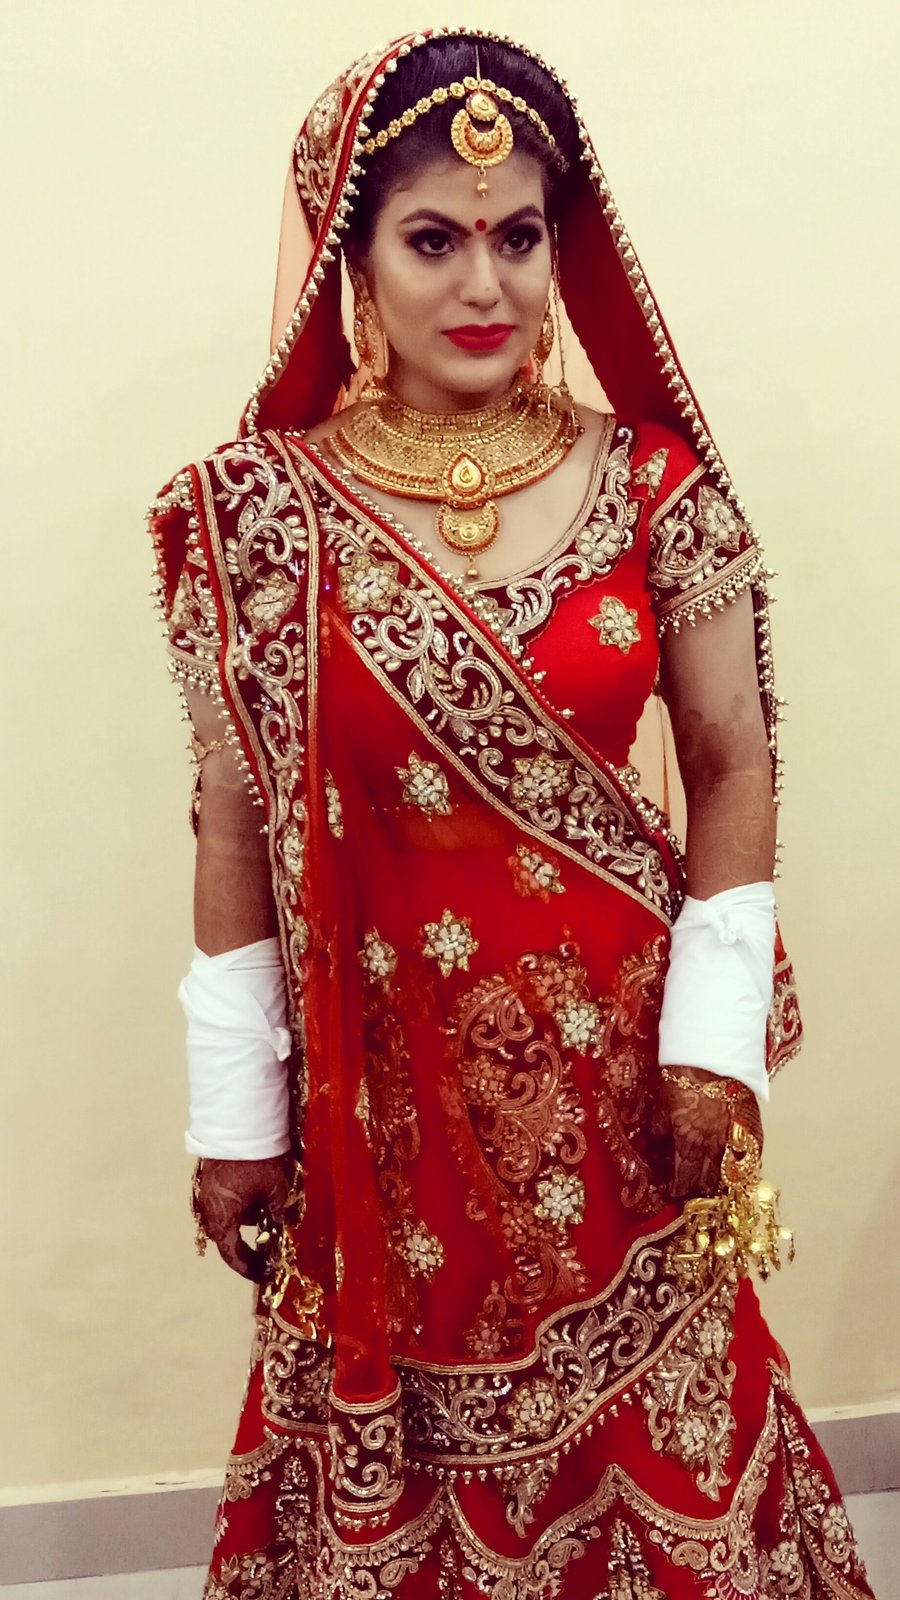 akanksha-choudhary-makeup-artist-delhi-ncr